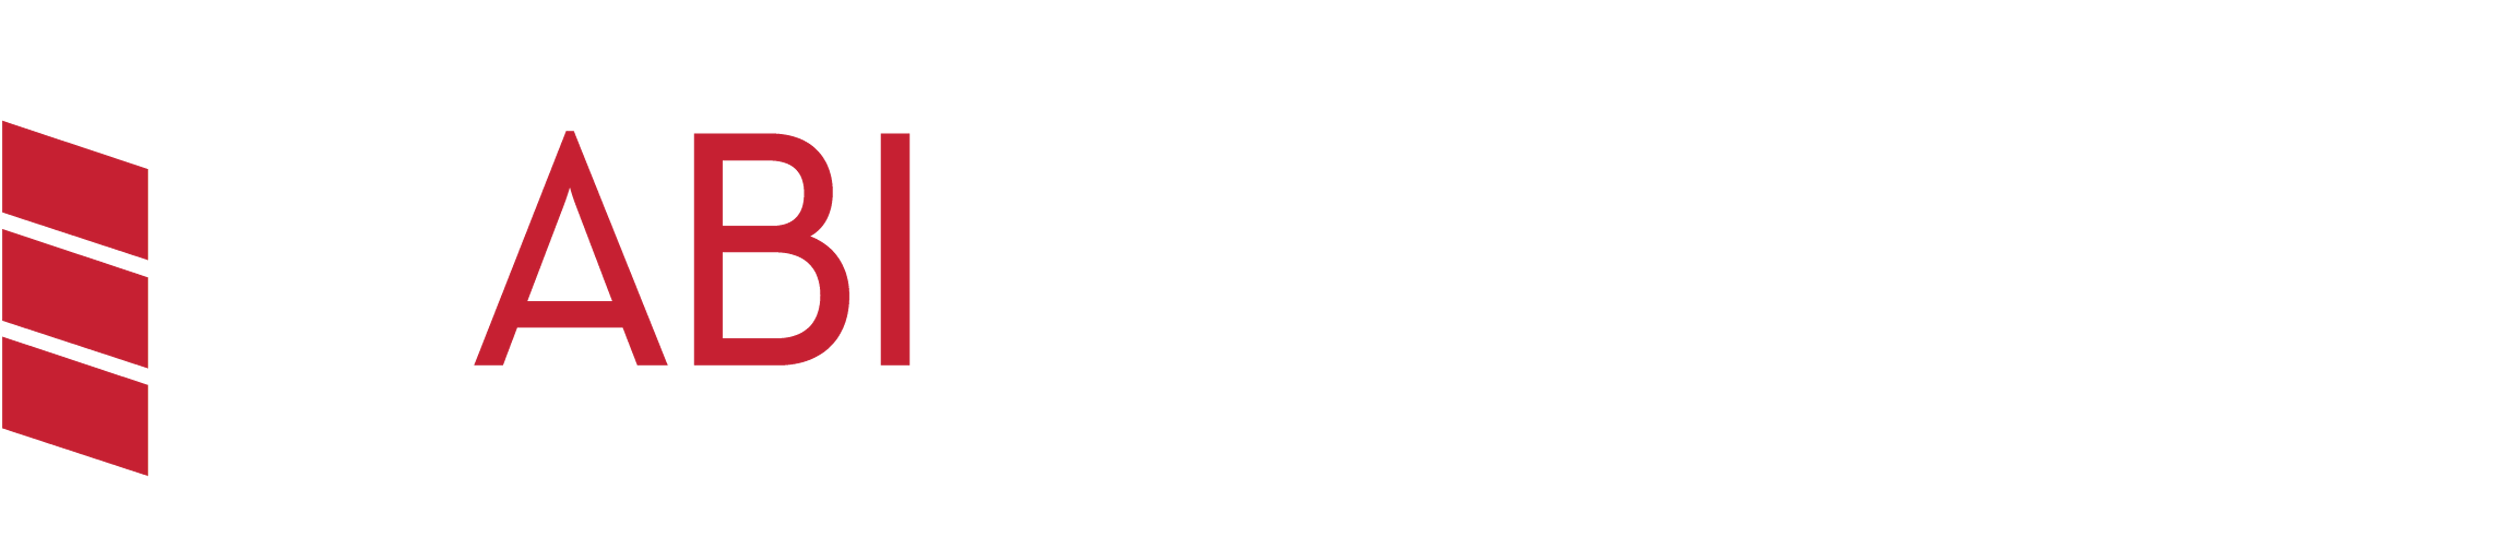 ABI Commercial Capital